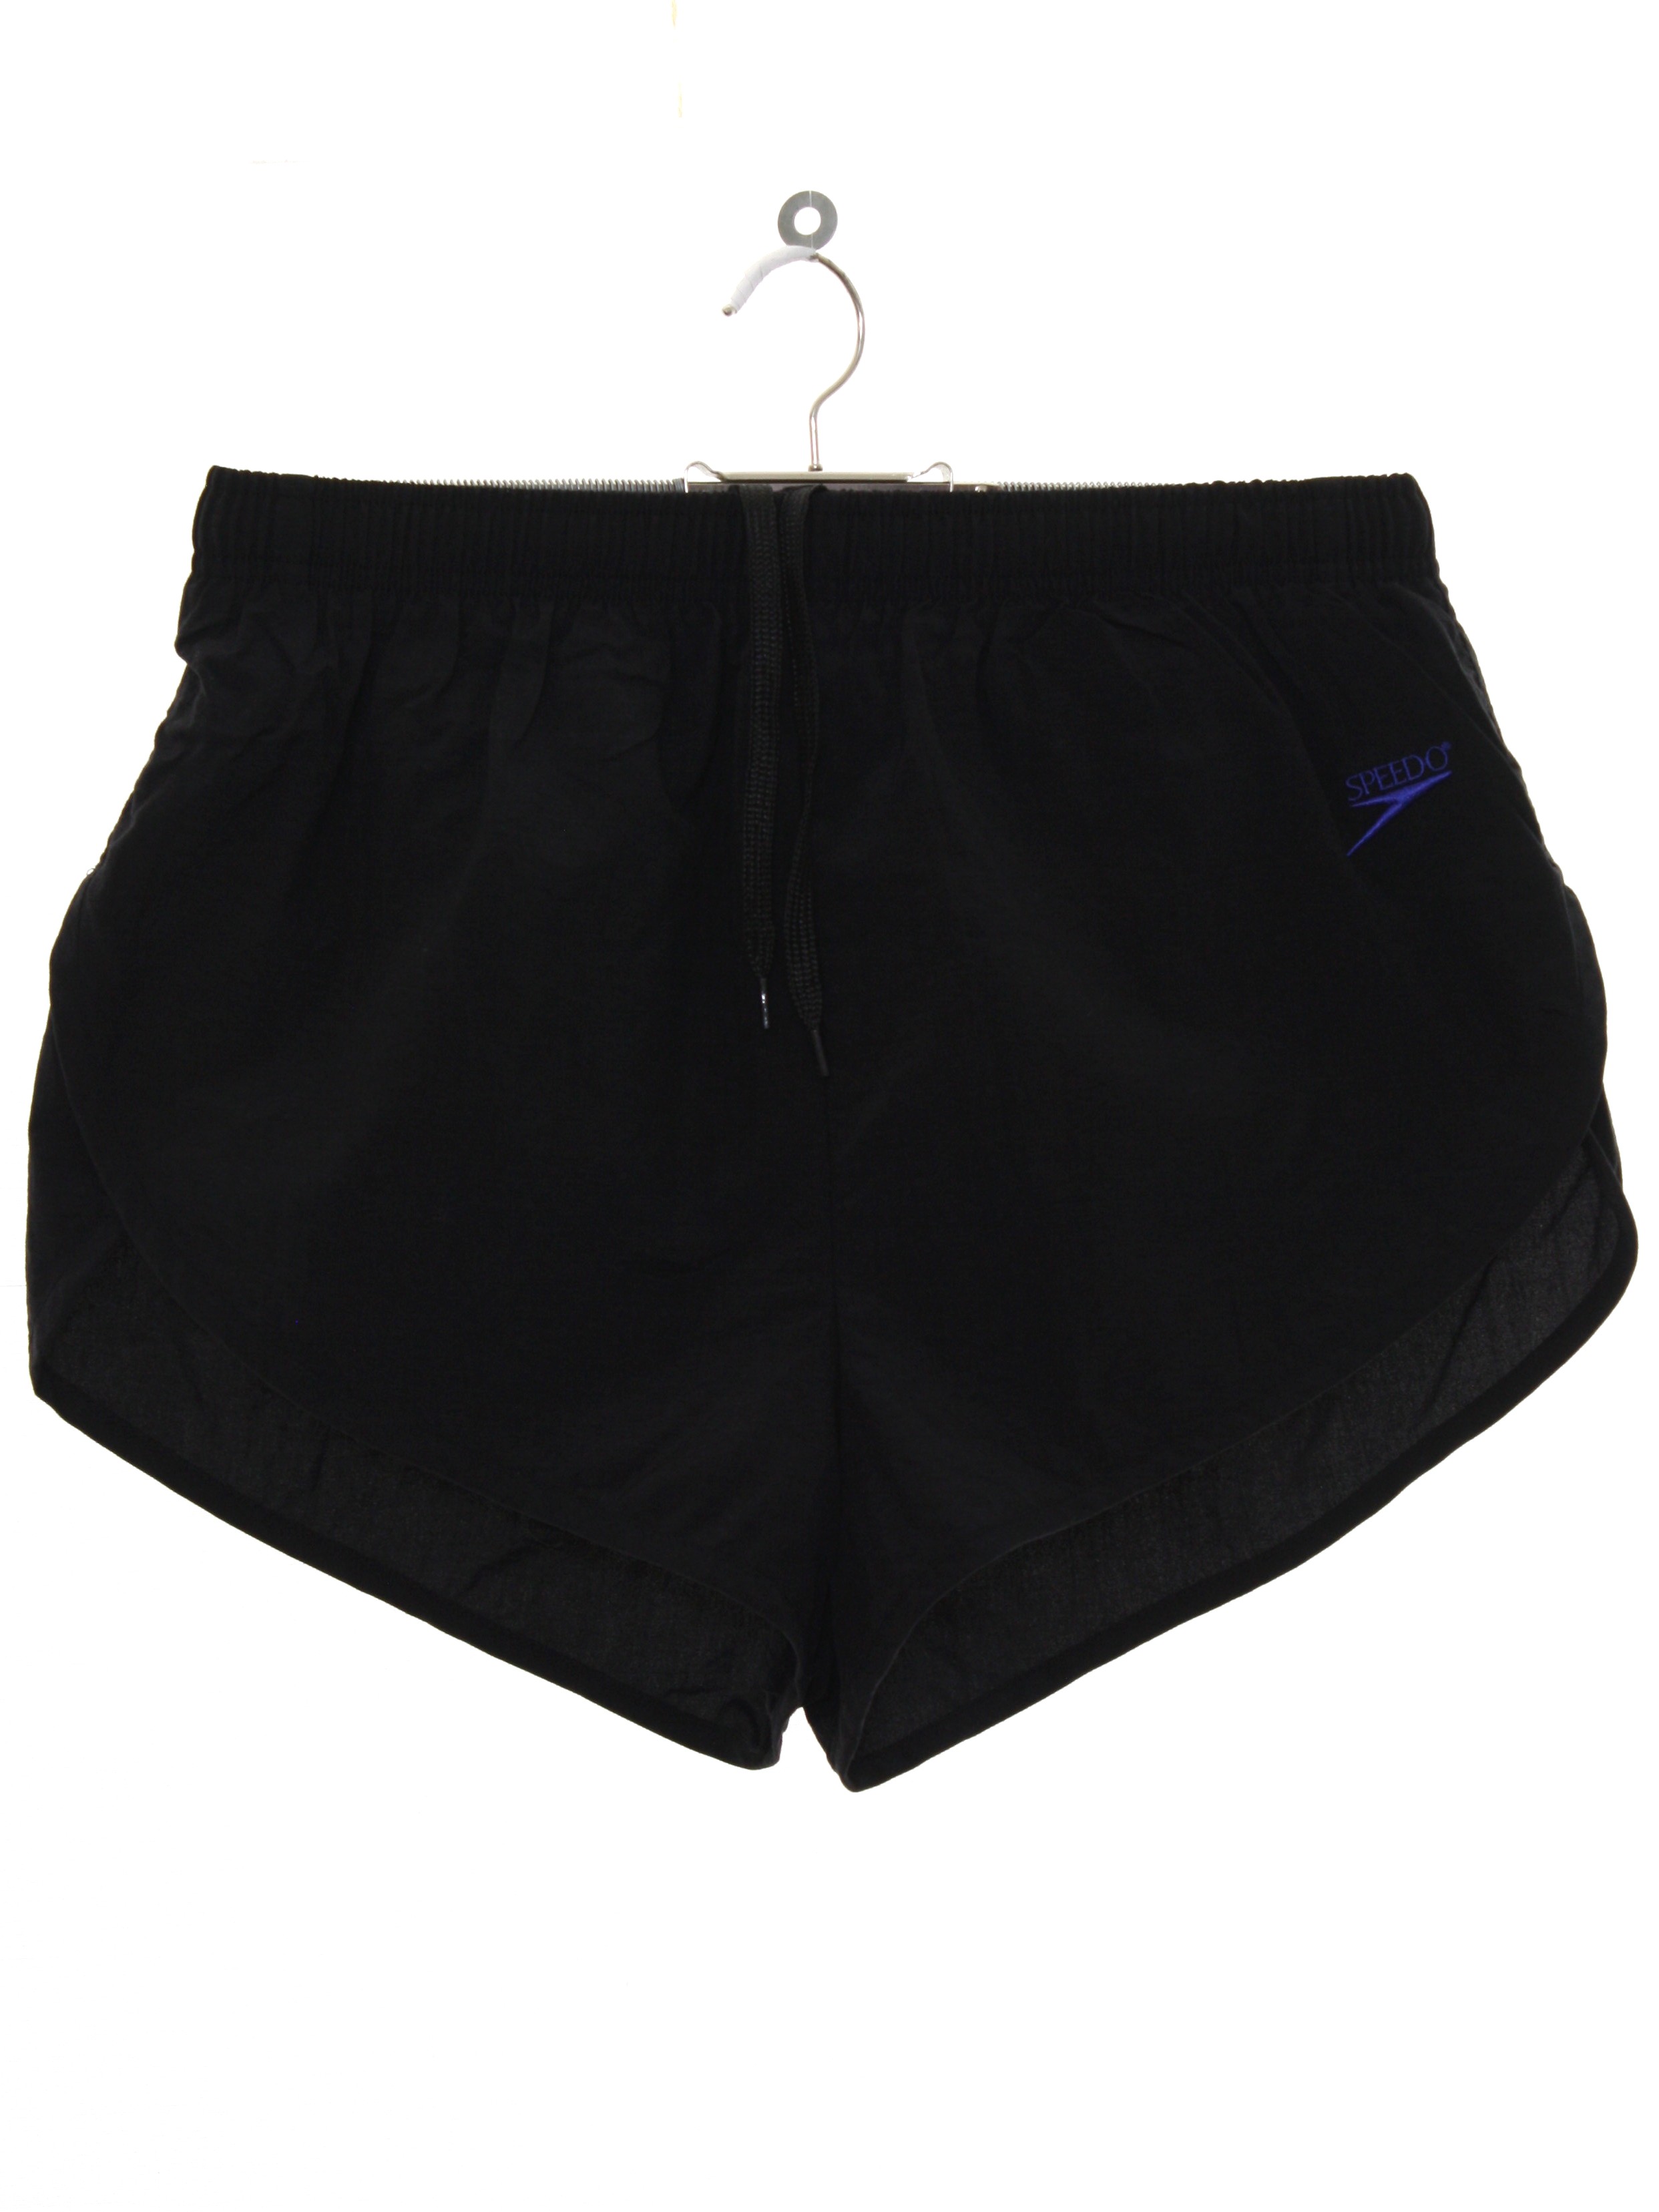 1990s Vintage Shorts: 90s -Speedo- Mens black background nylon wicked ...